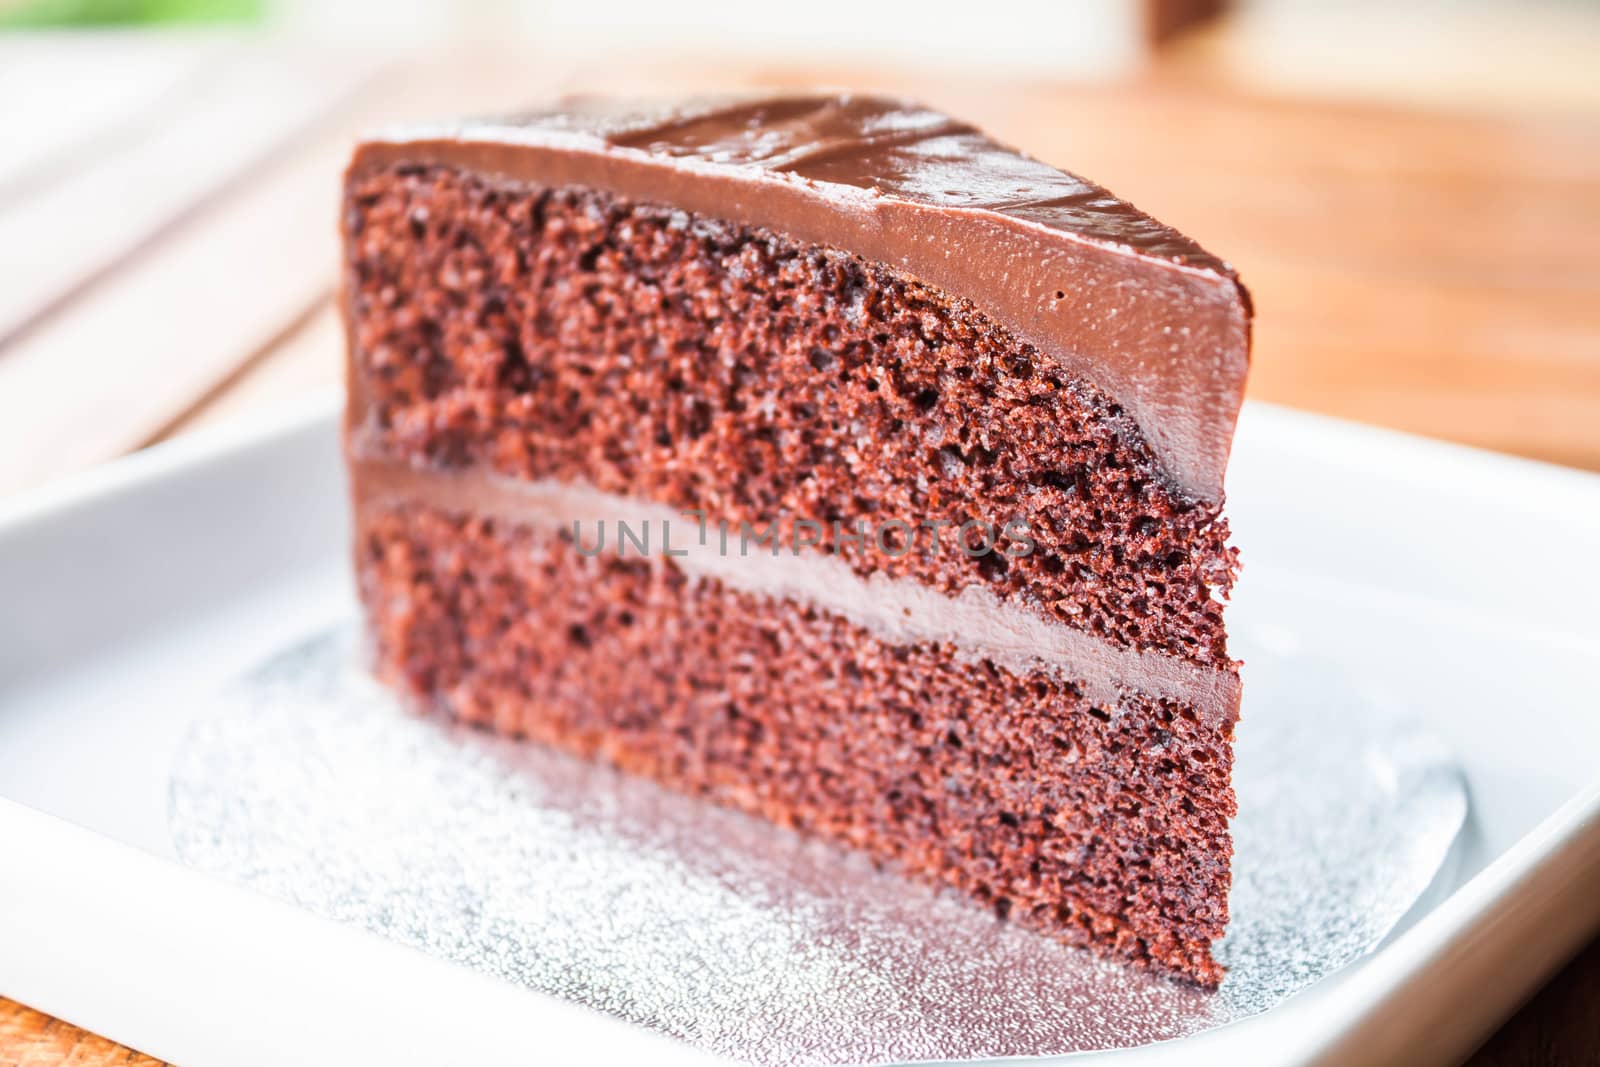 Part of chocolate sponge cake up close